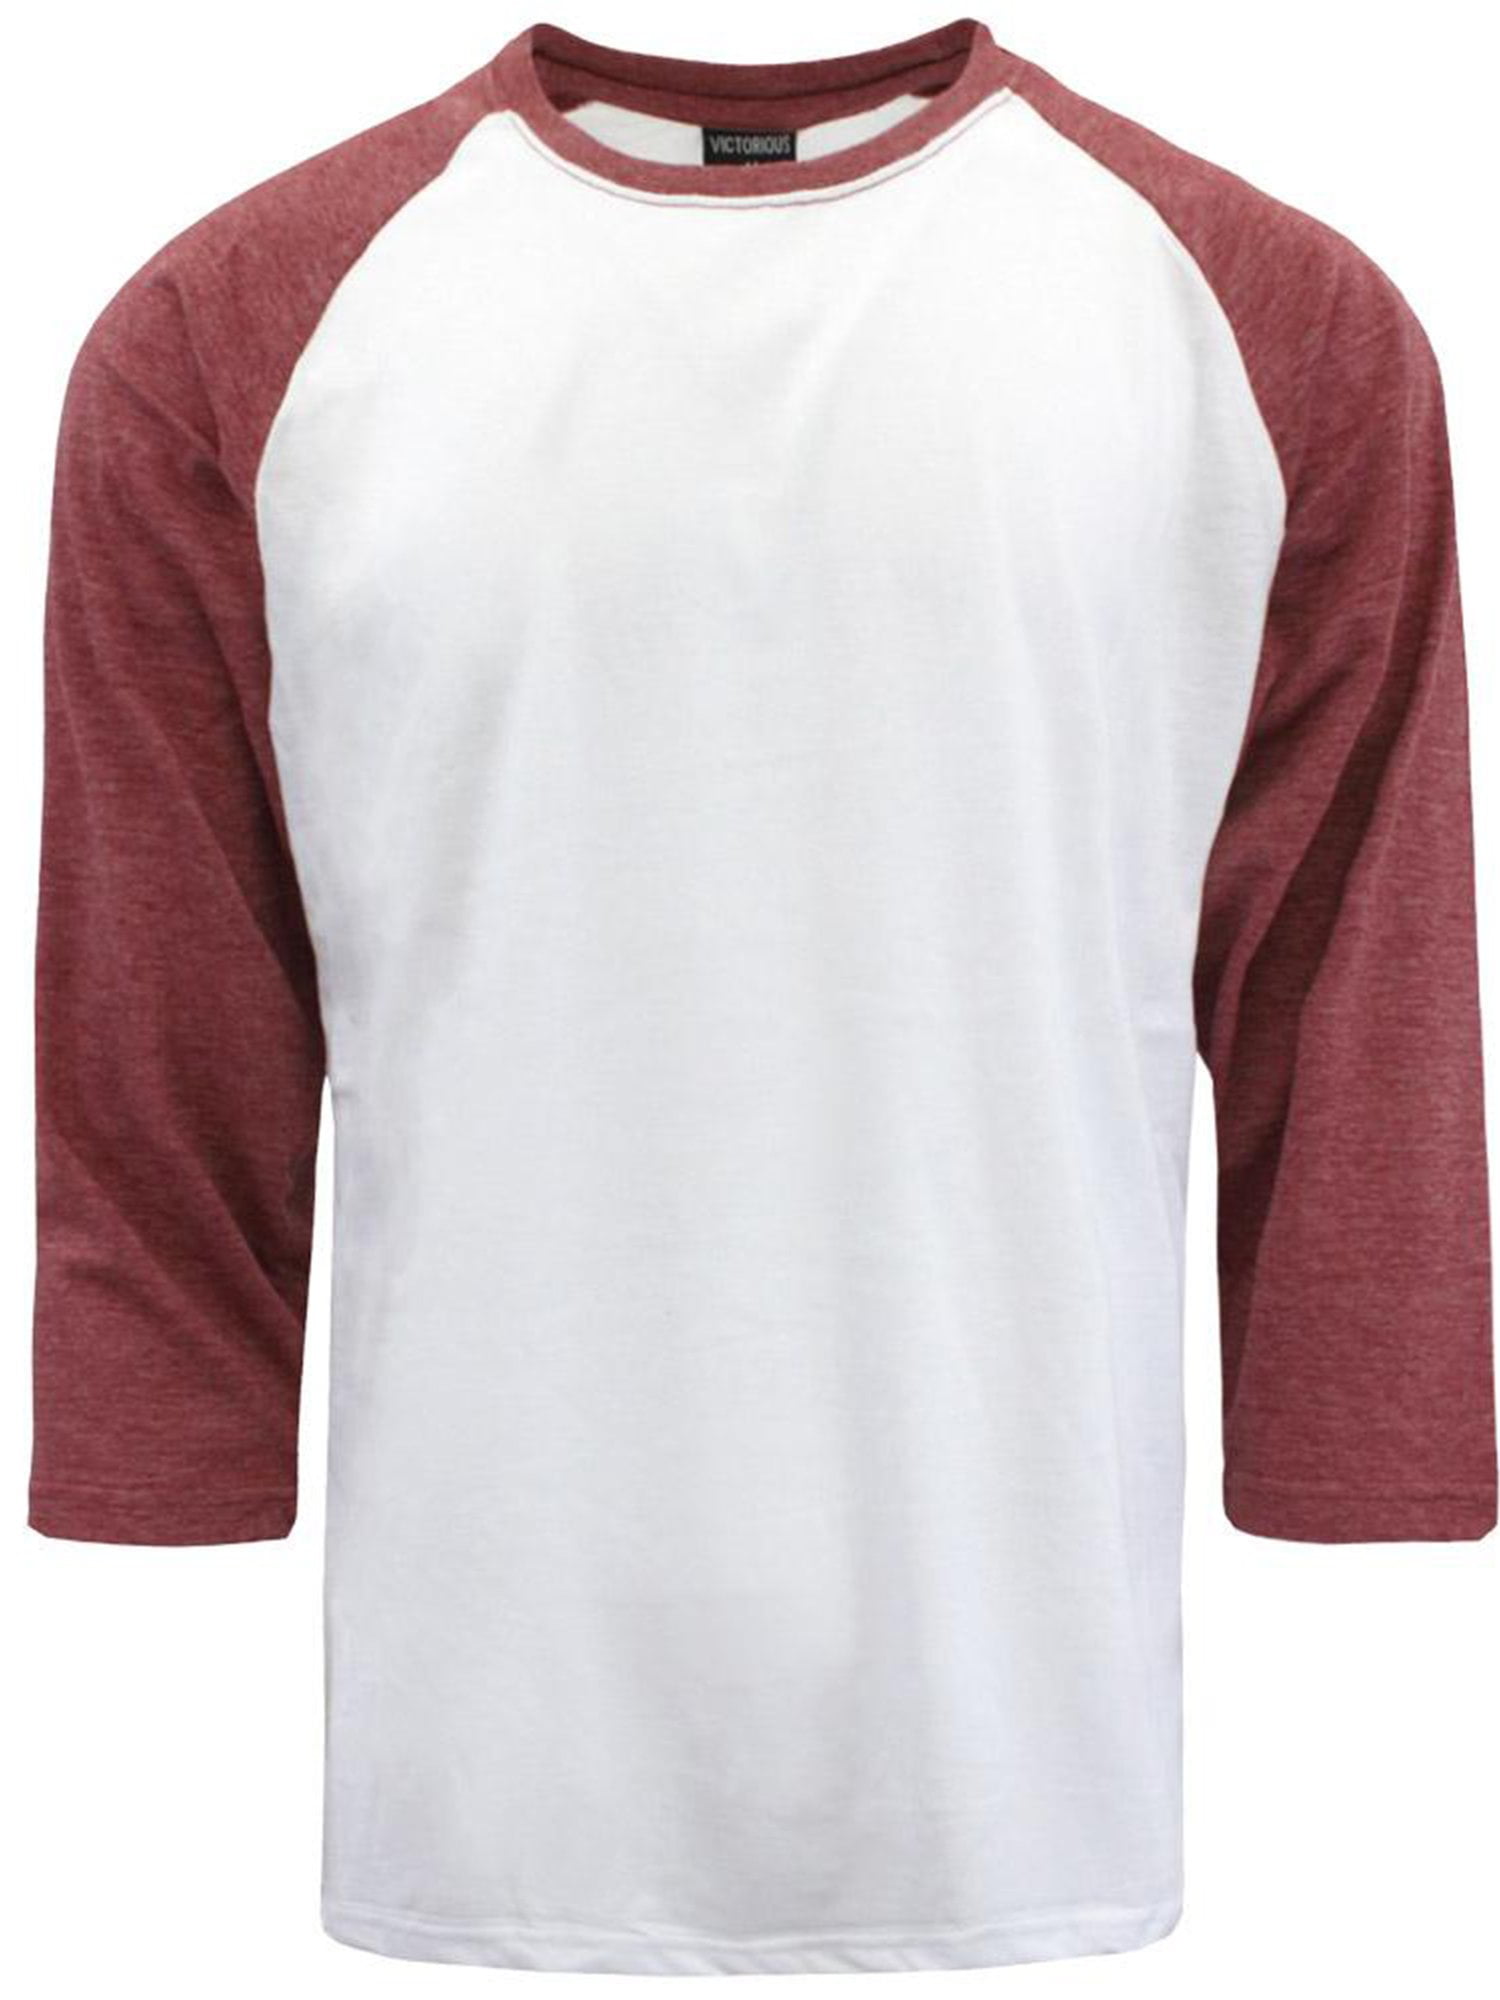 Victorious Men's Classic Button Down Baseball Jersey Shirt BJ42 - Burgundy - Medium, Red